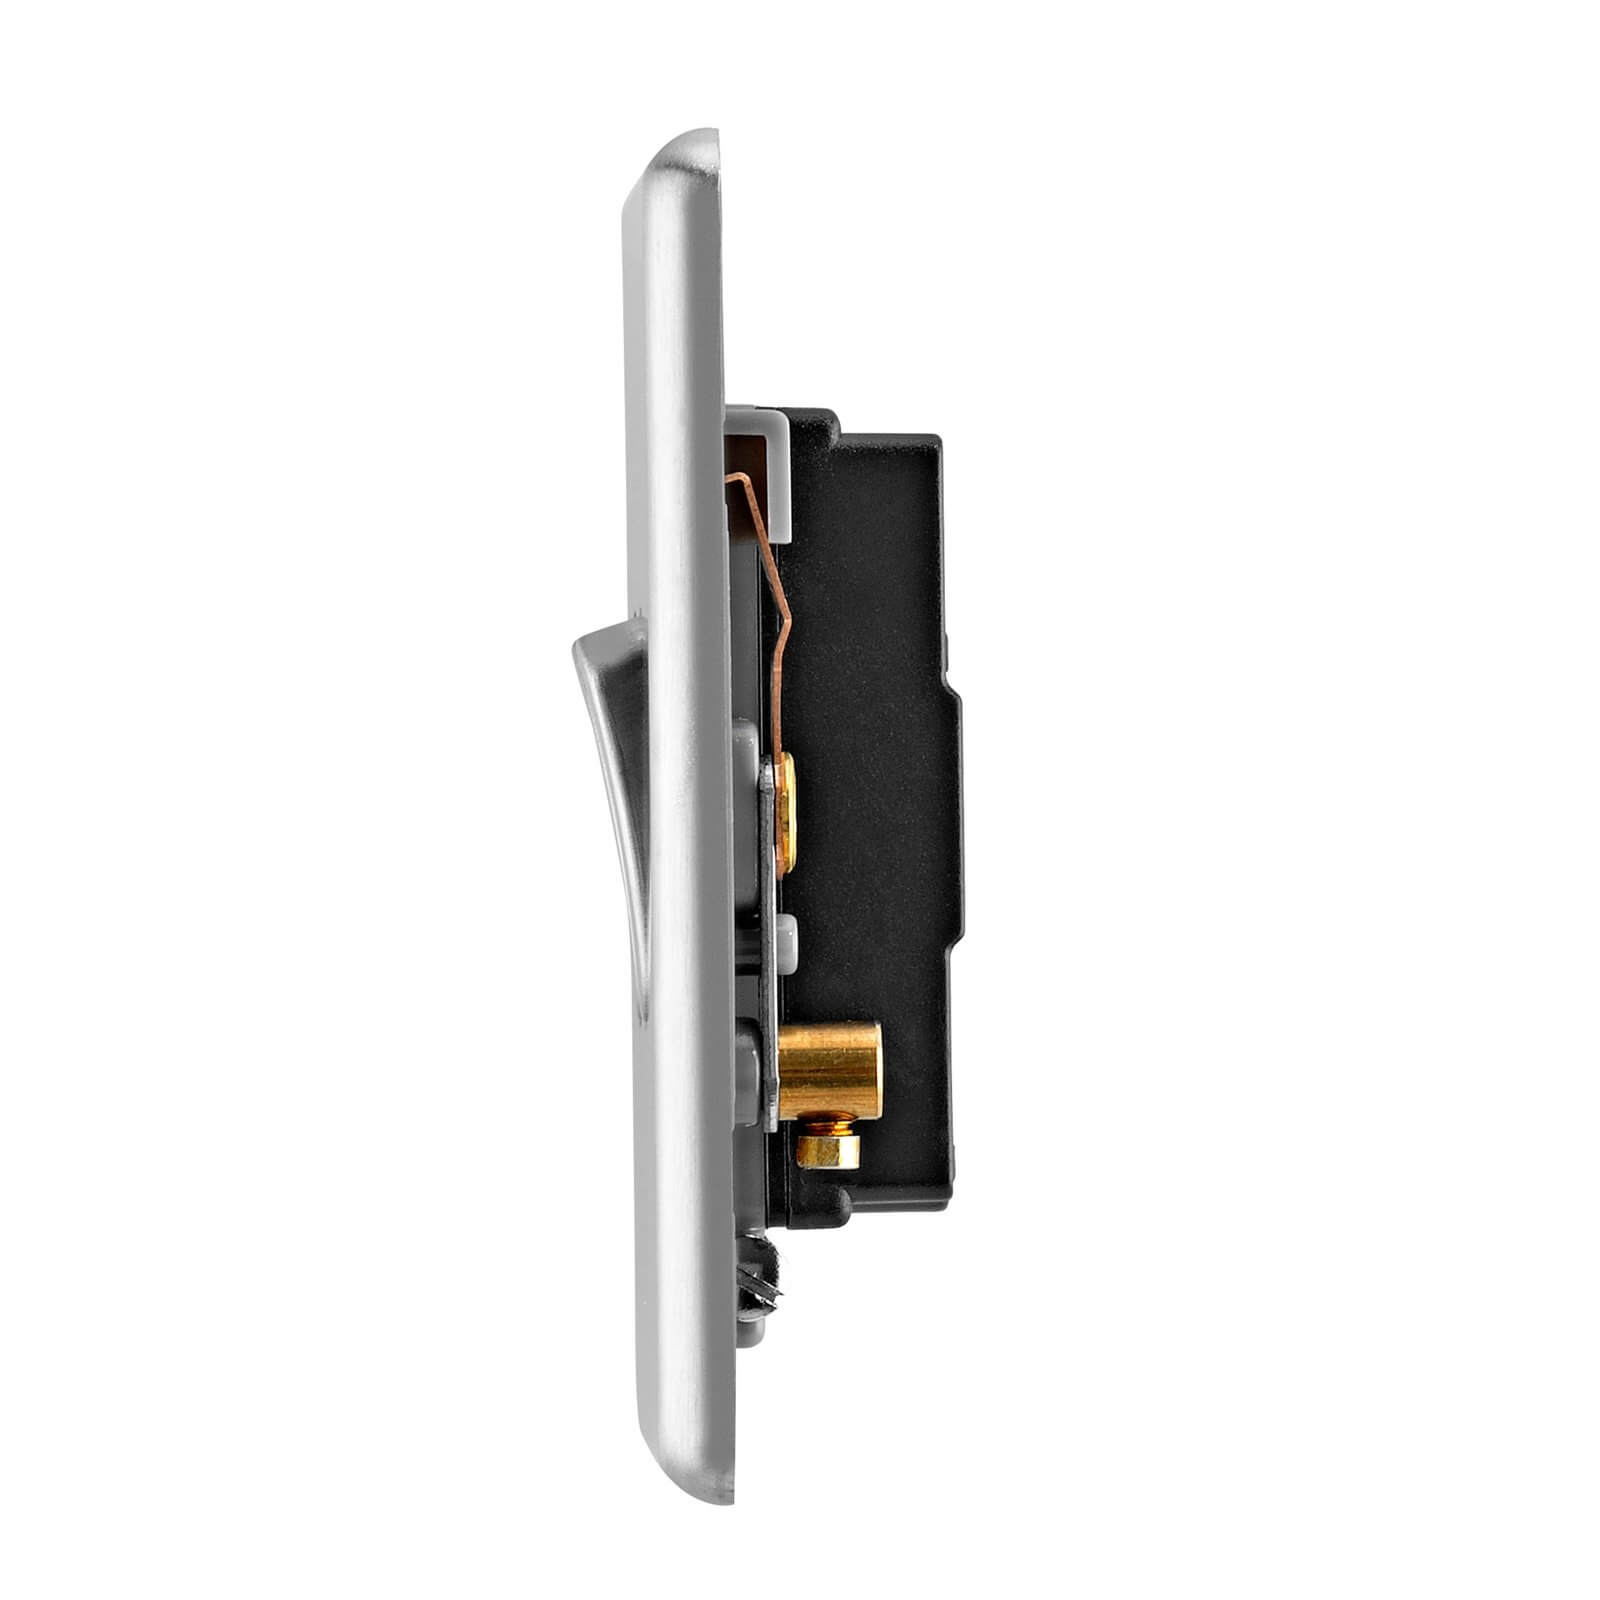 Arlec Fusion 10A 1Gang 2Way Polished Chrome Single light switch